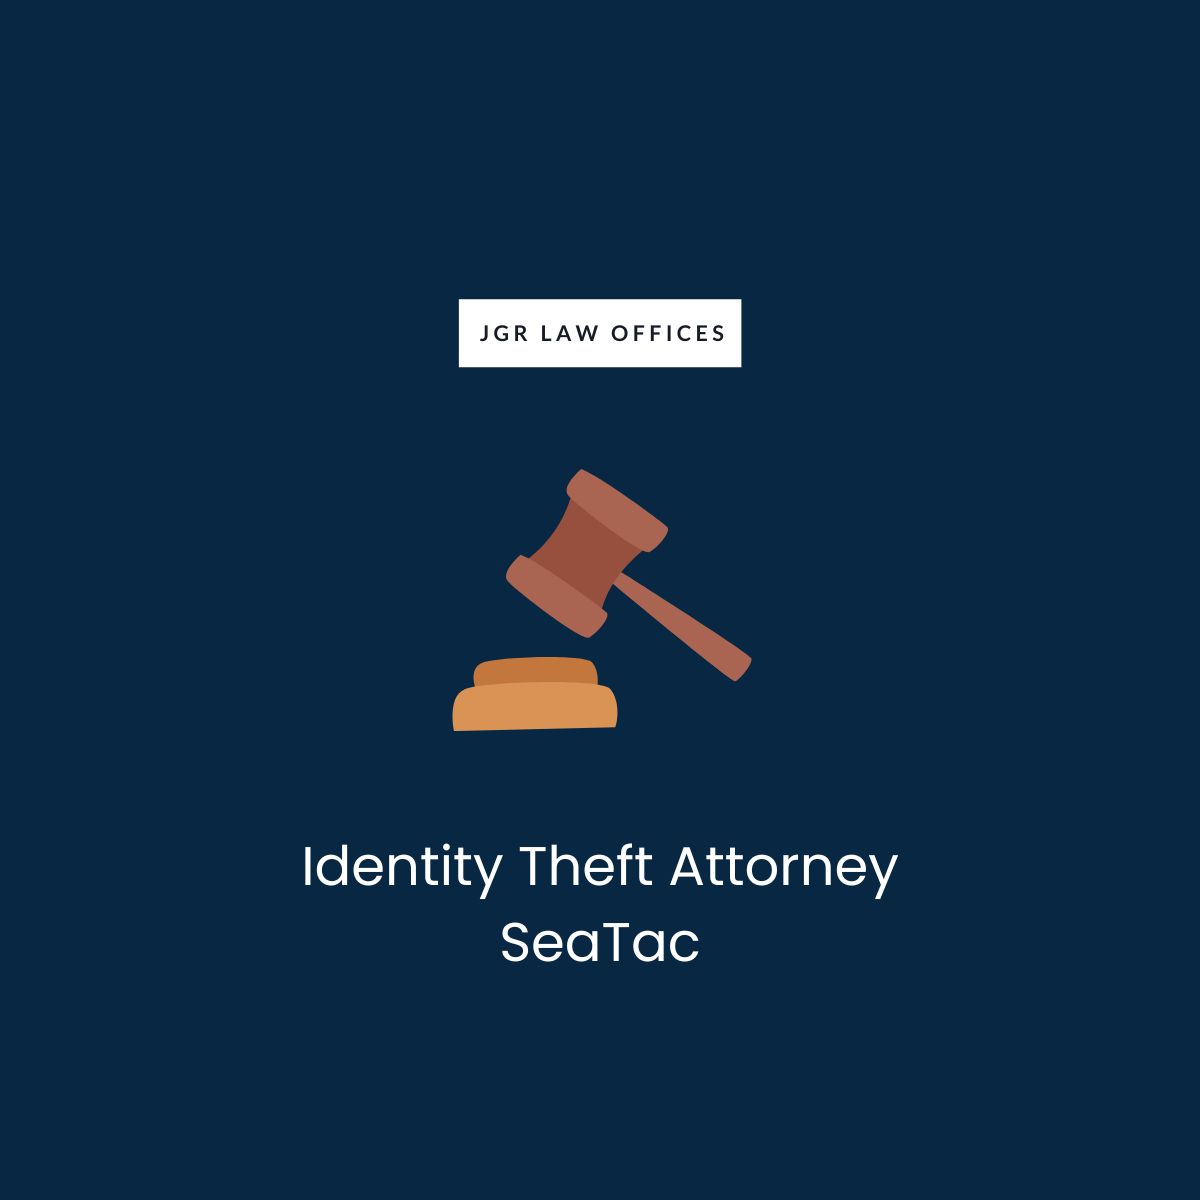 Identity Theft Attorney SeaTac Identity Theft Identity Theft